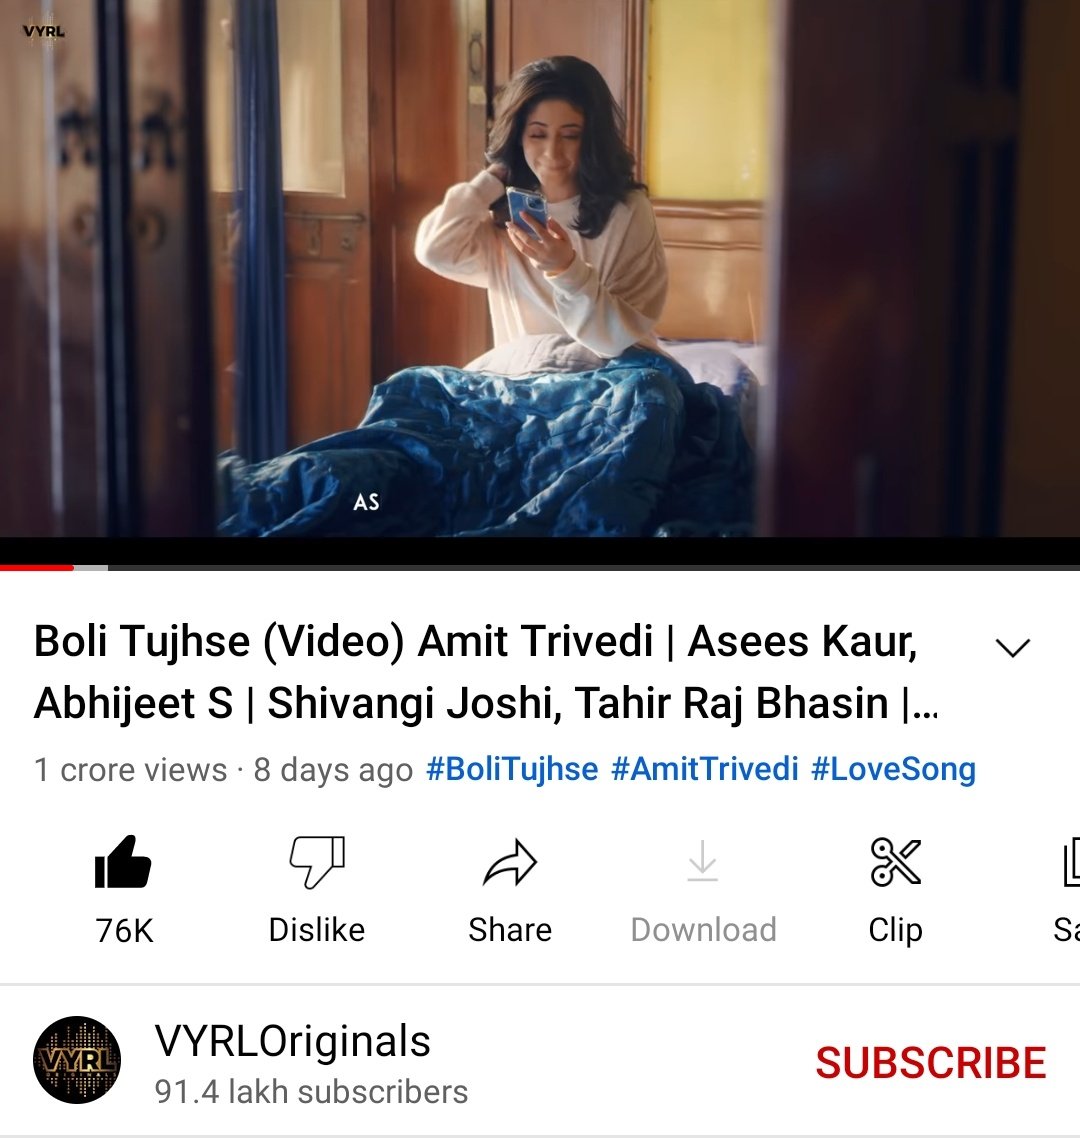 And Finally It's 10 millions 😍💃
#ShivangiJoshi #TahirRajBhasin #BoliTujhse 

@shivangijoshi10